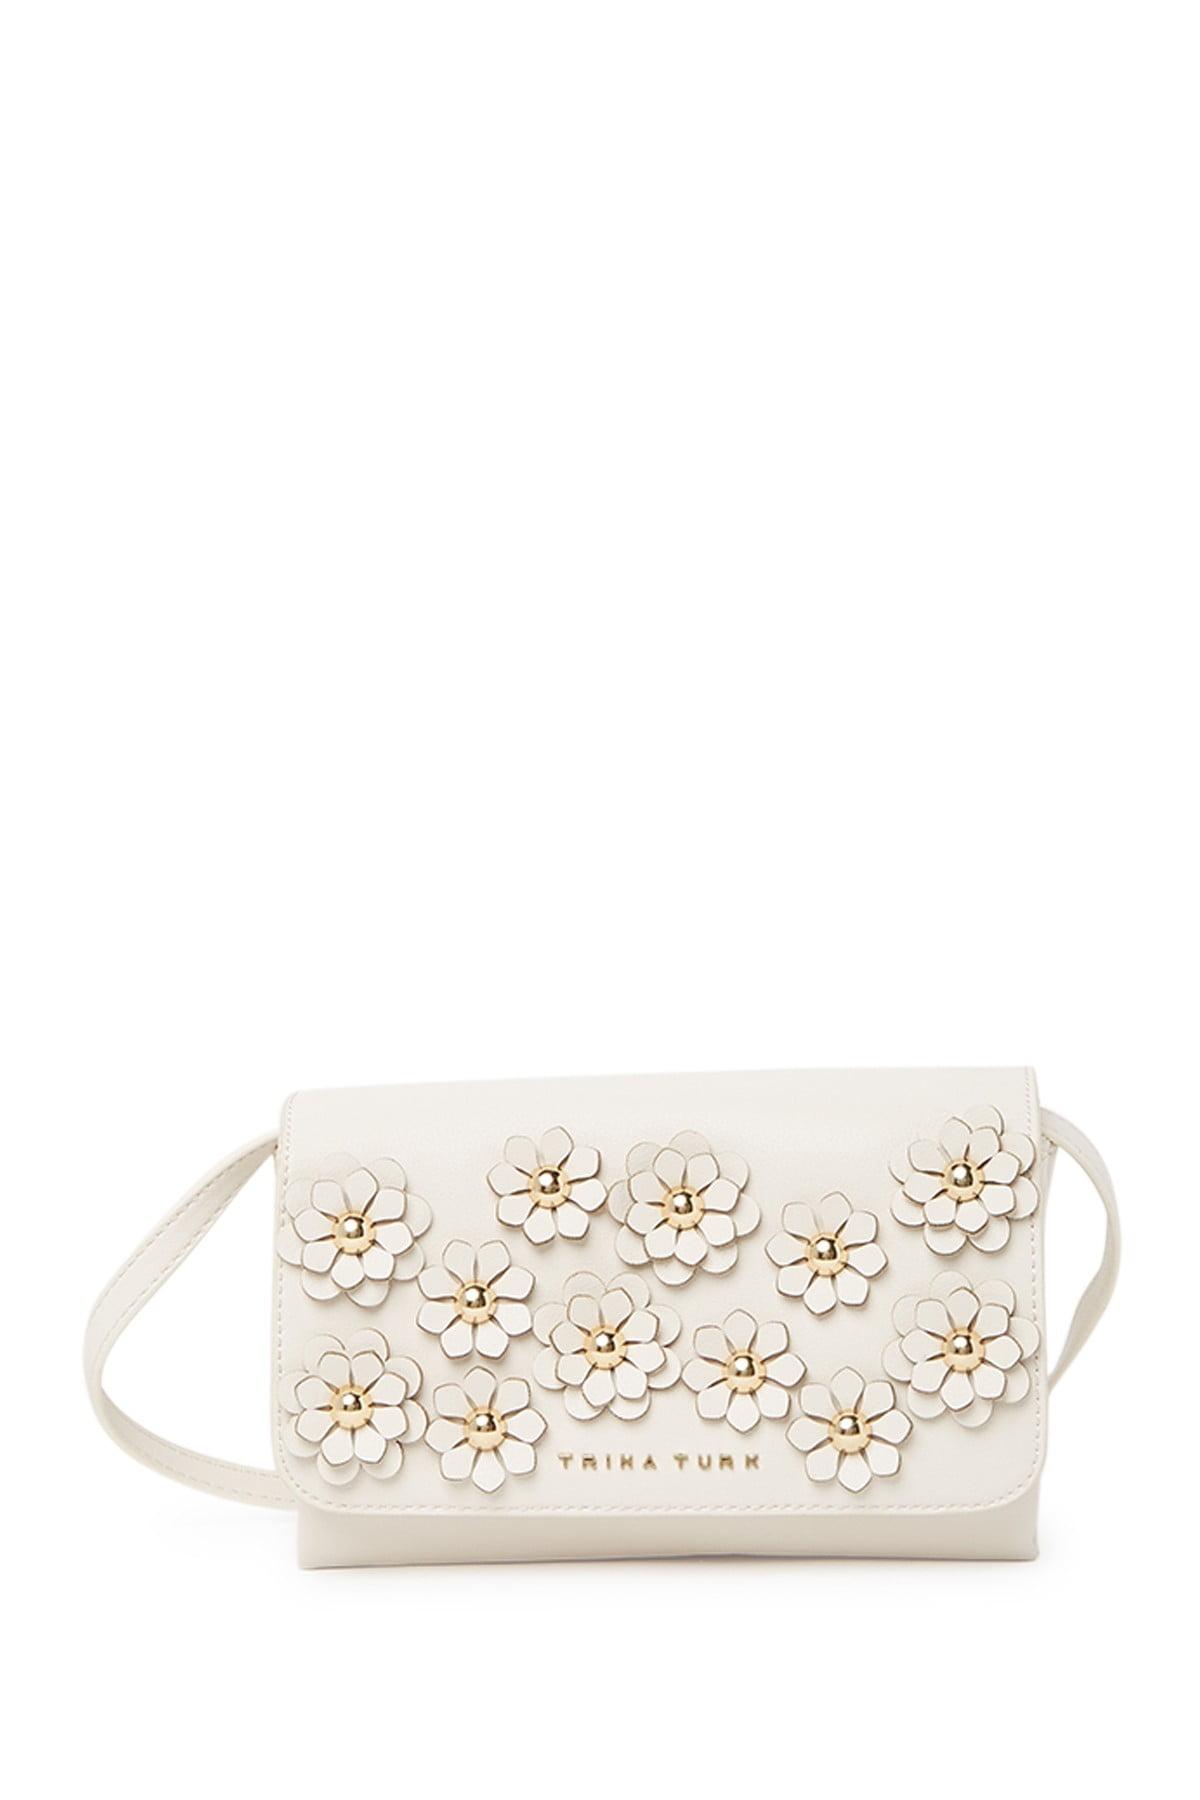 Trina Turk Flower Applique Crossbody Bag in White | Lyst